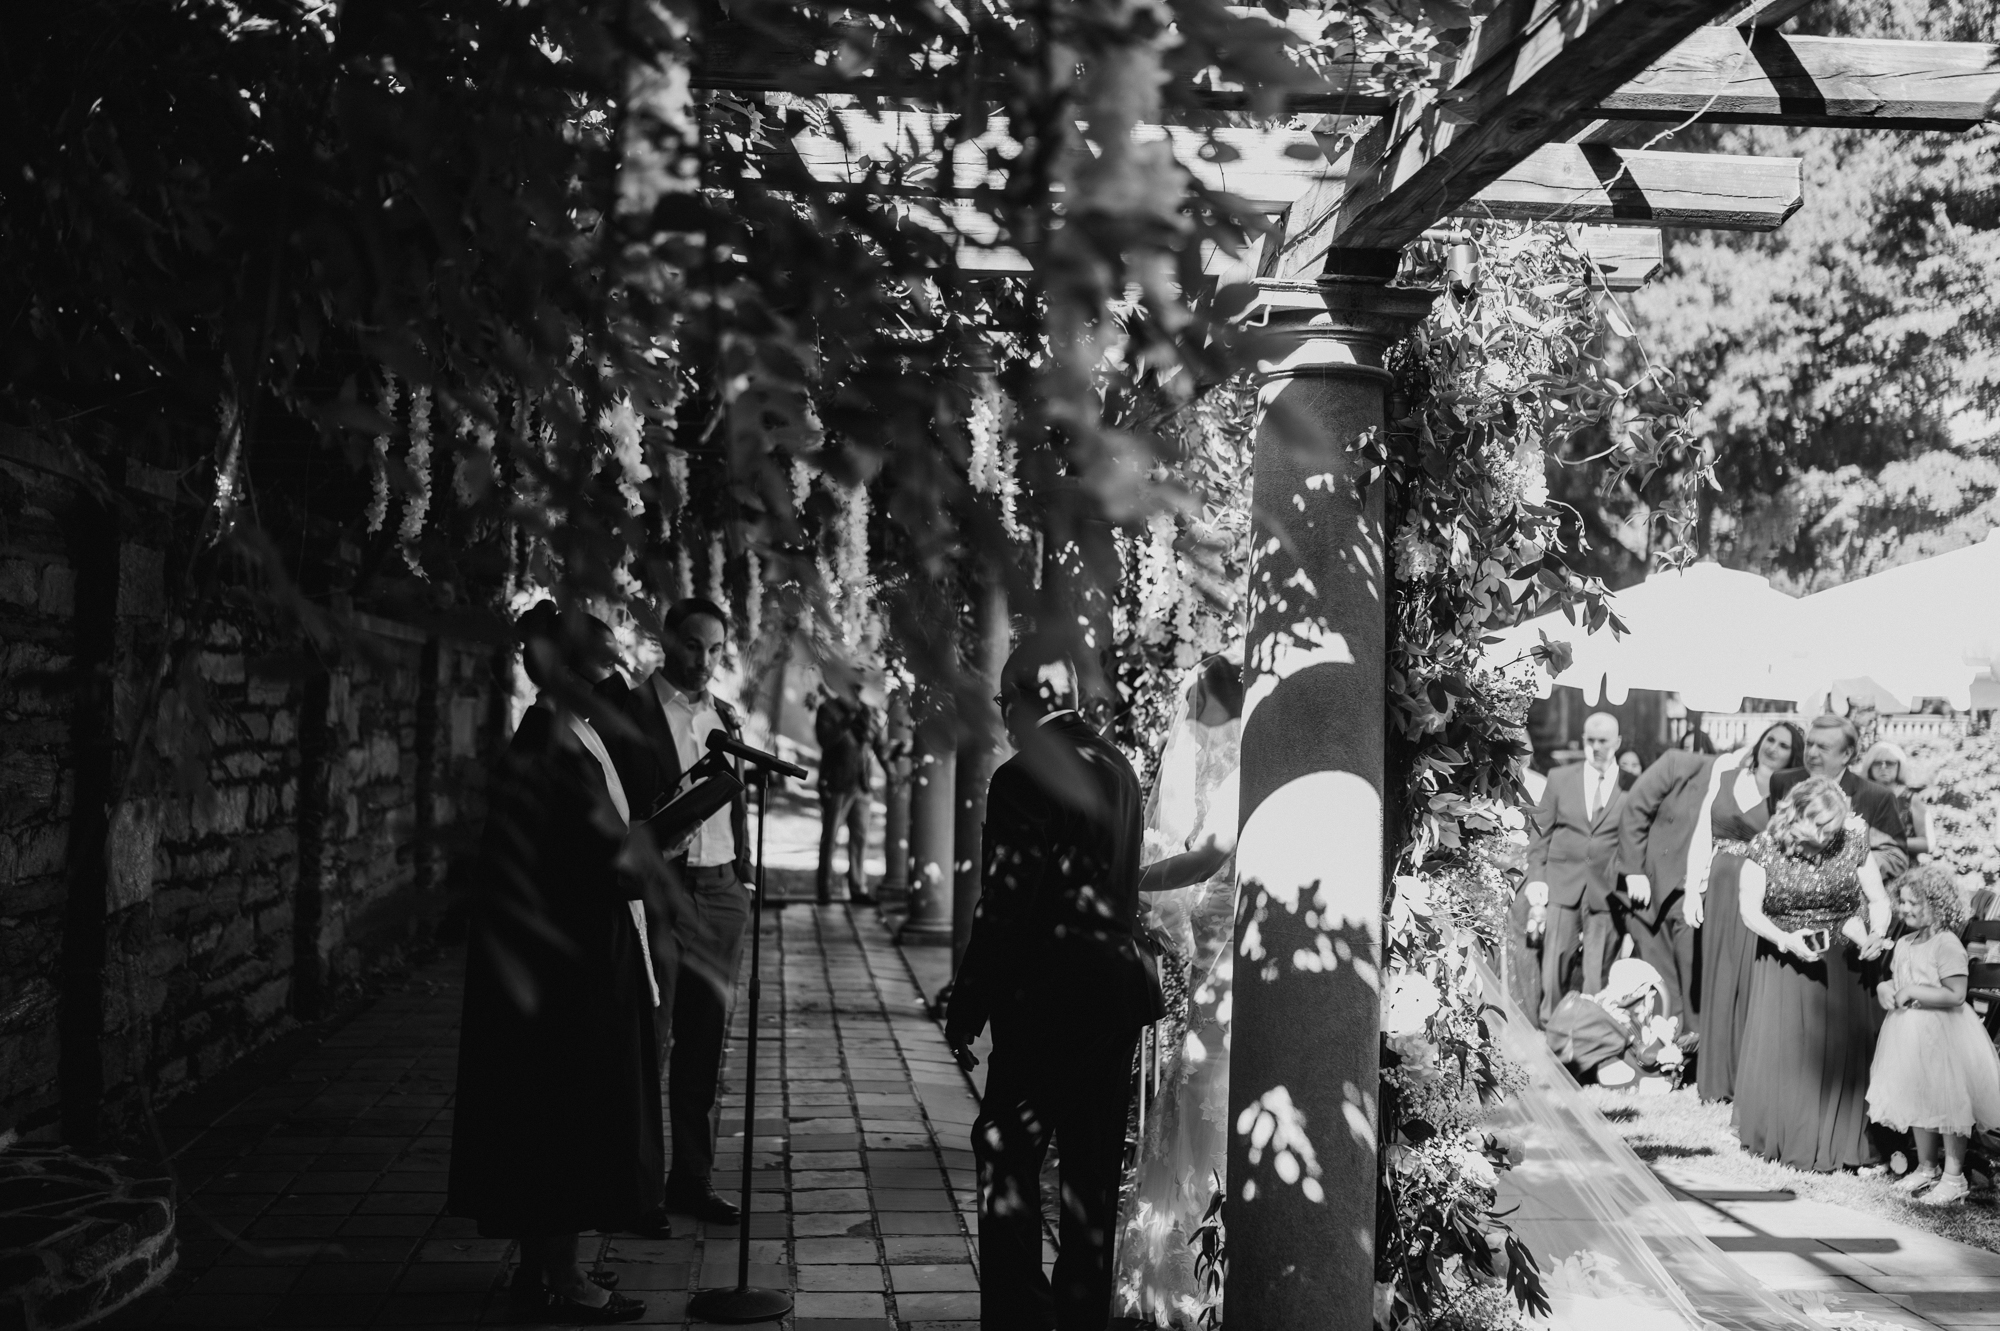 curtis arboretum wedding photography pennsylvania 01 65